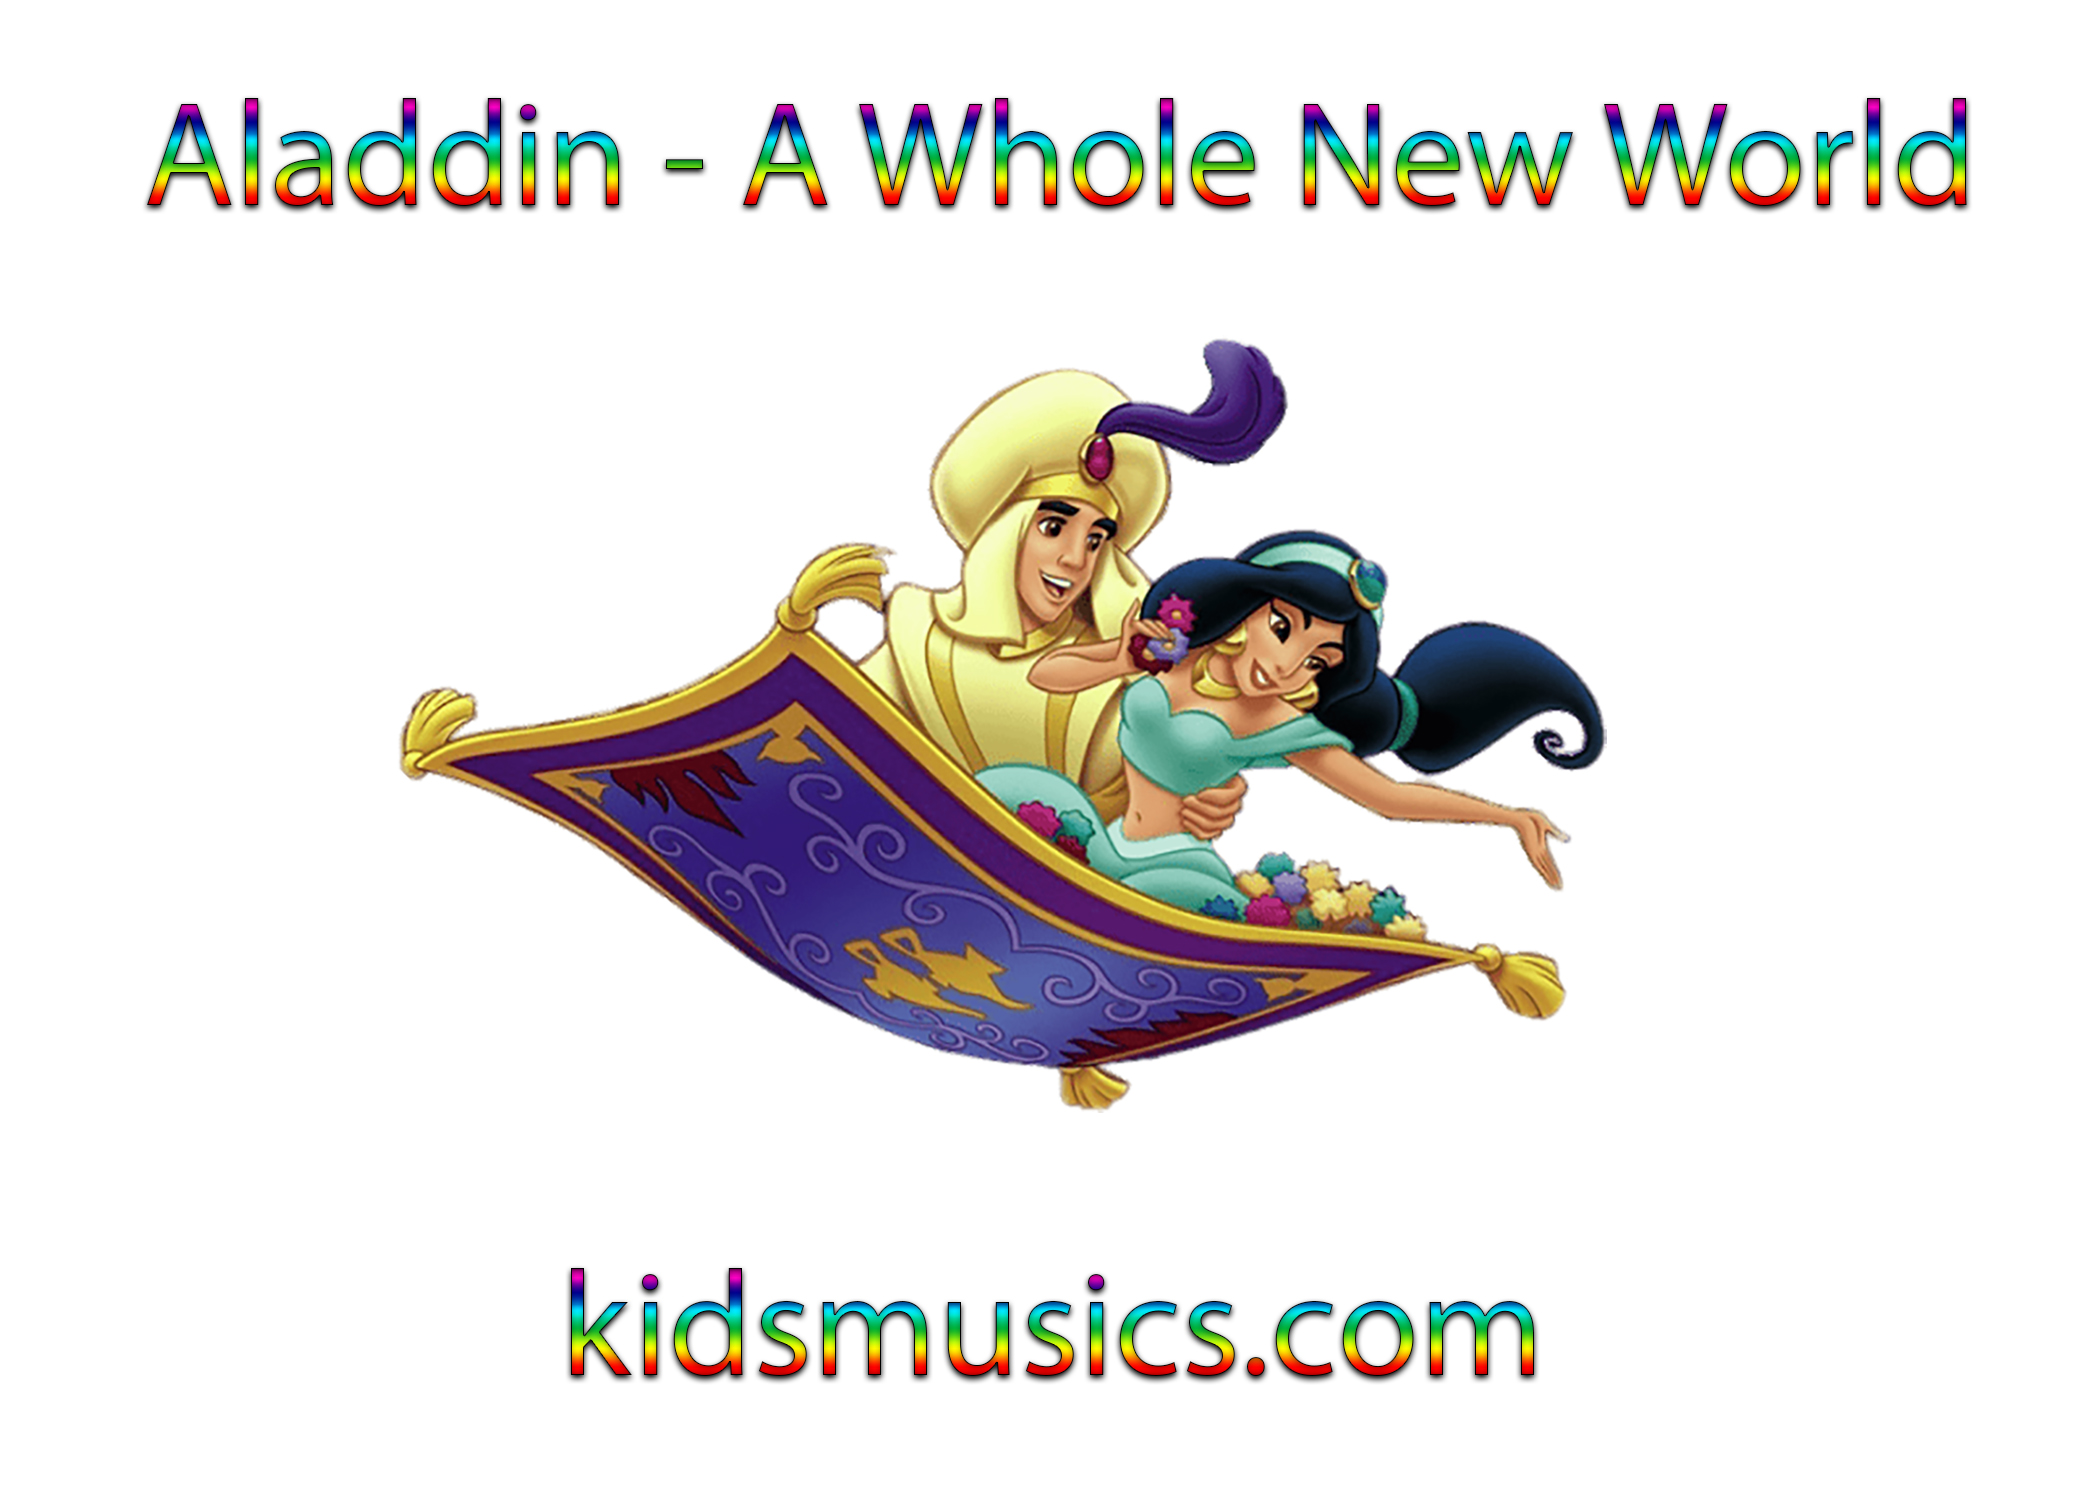 Kidsmusics Download Aladdin A Whole New World Free Mp3 3kbps Zip Archive